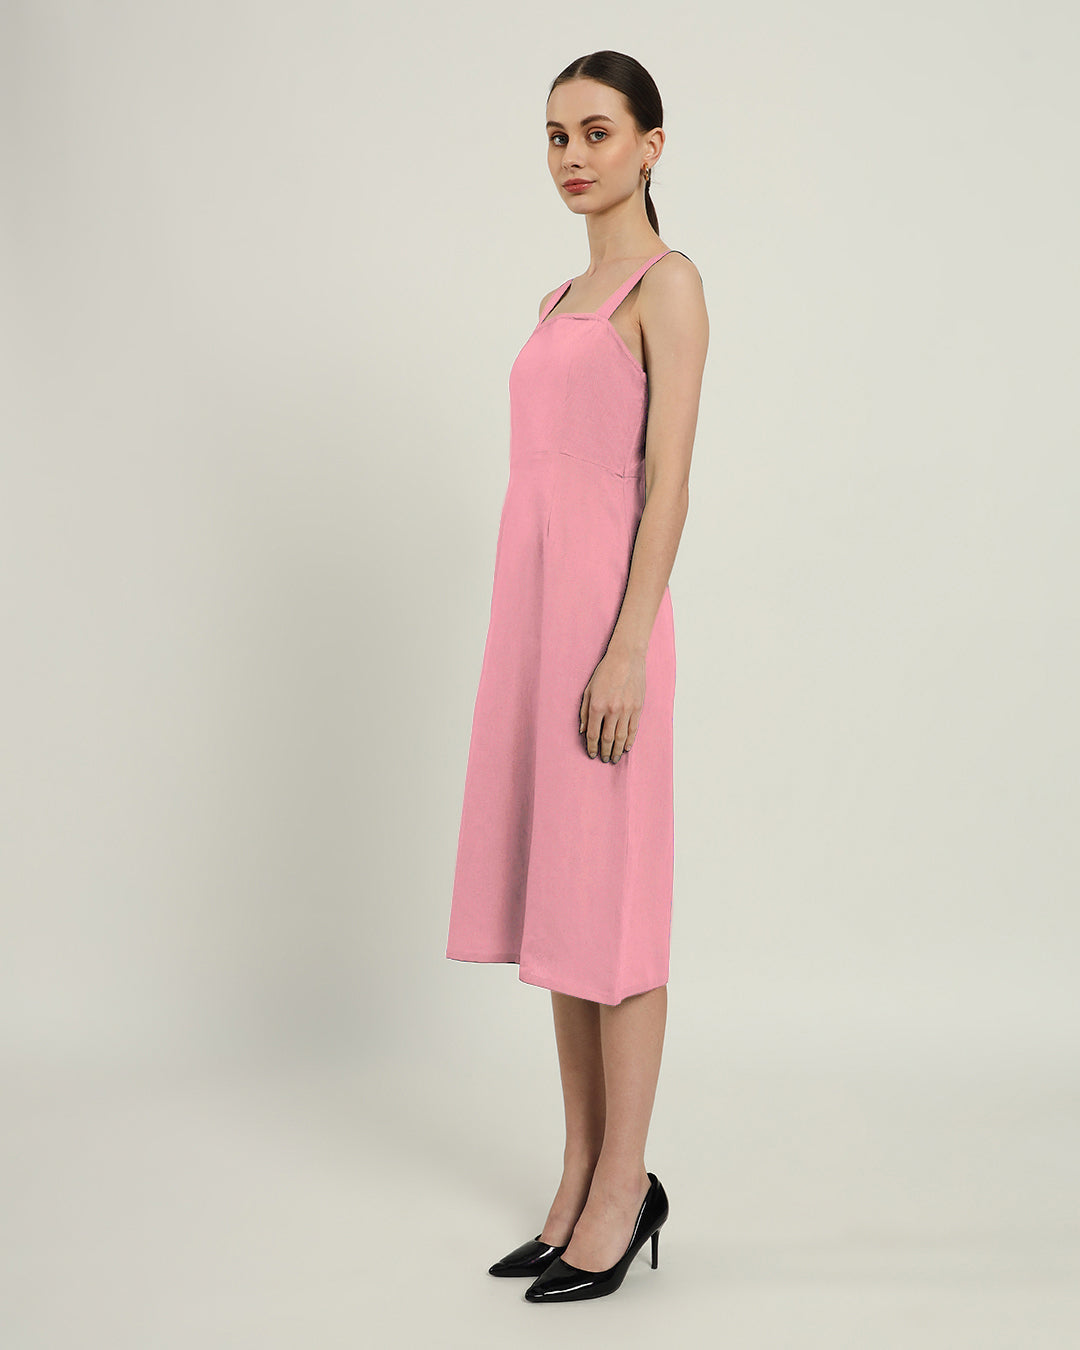 The Samara Fondant Pink Cotton Dress